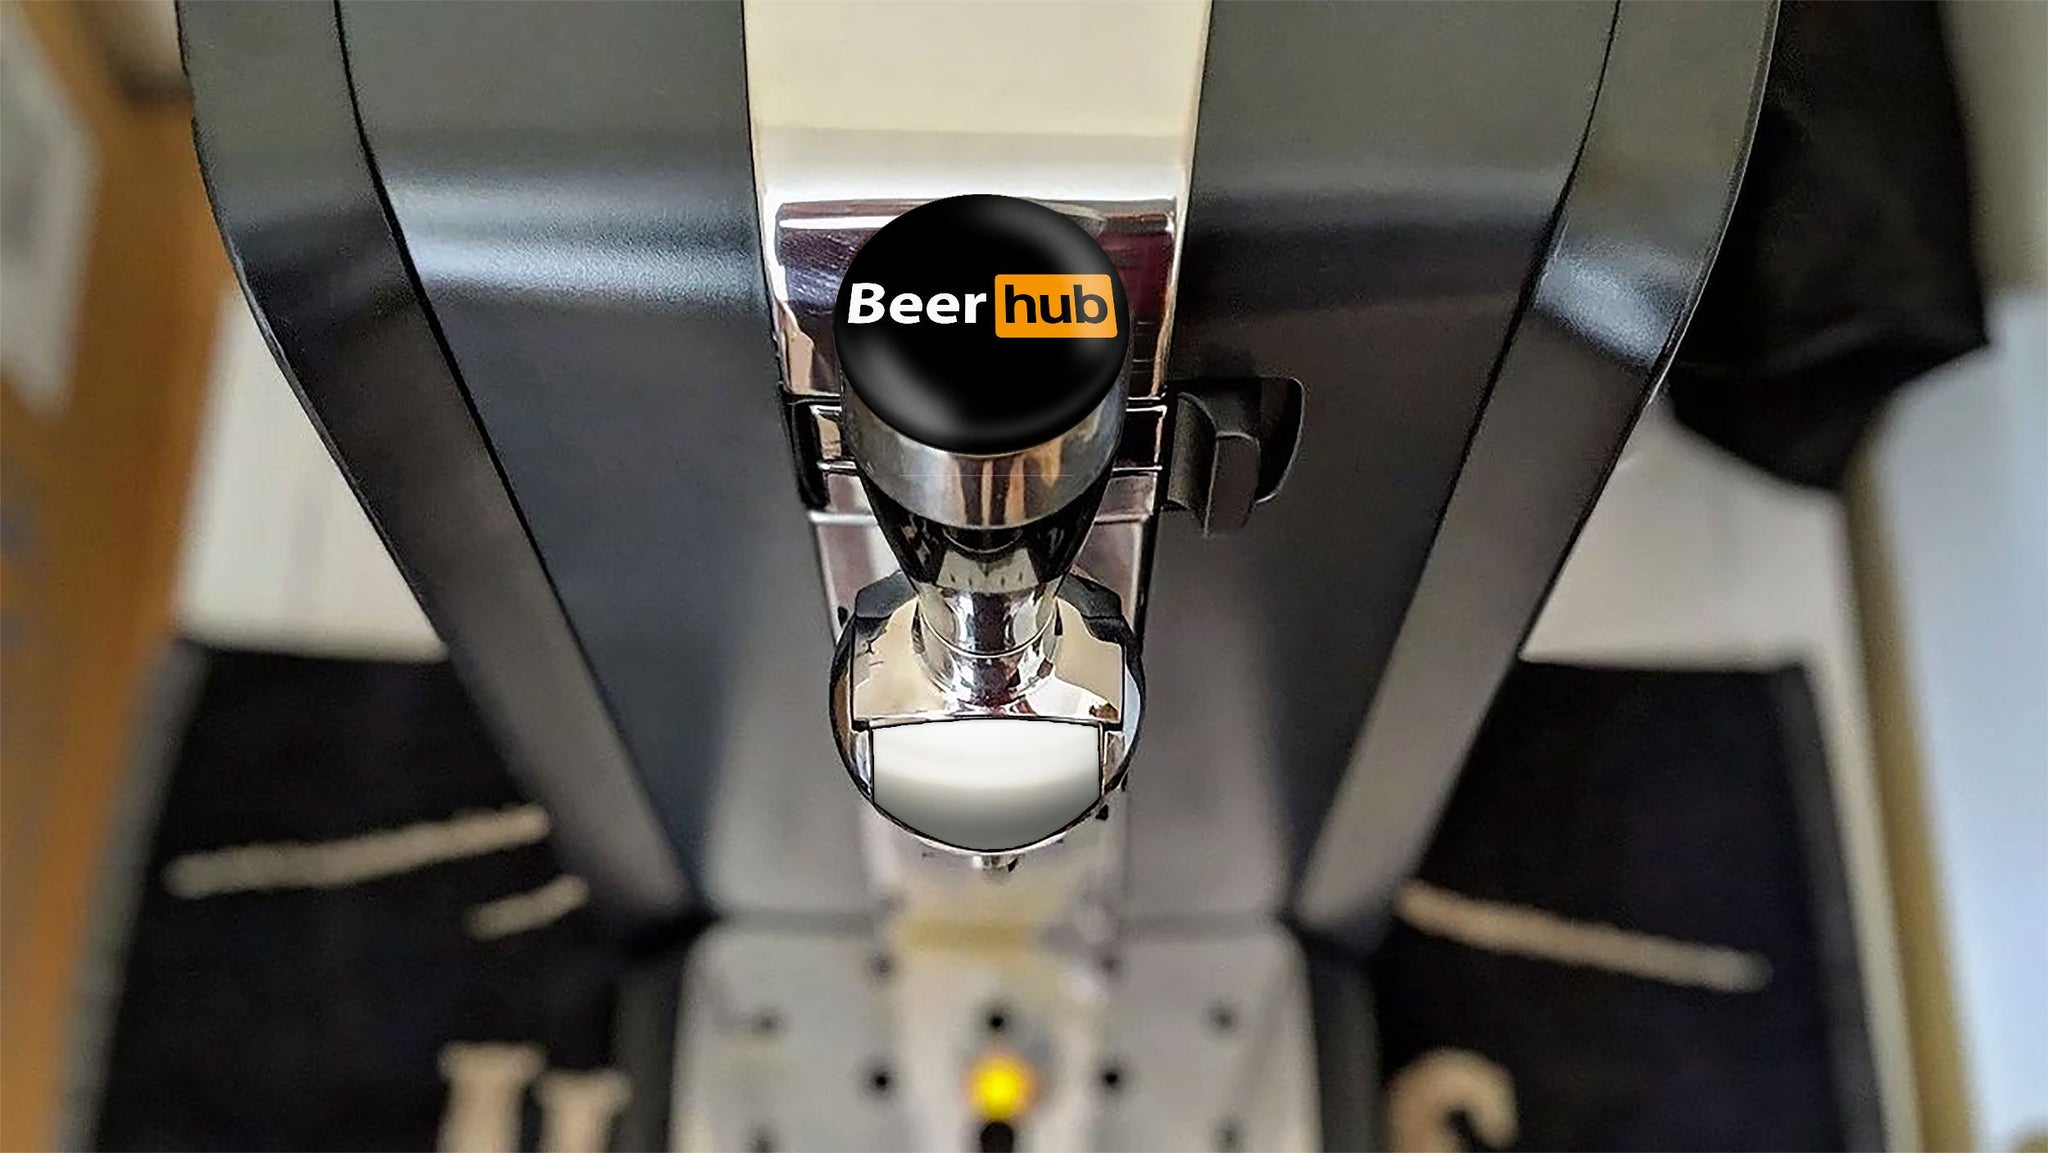 Beer Hub Porn Hub Perfect Draft Medallion Magnet